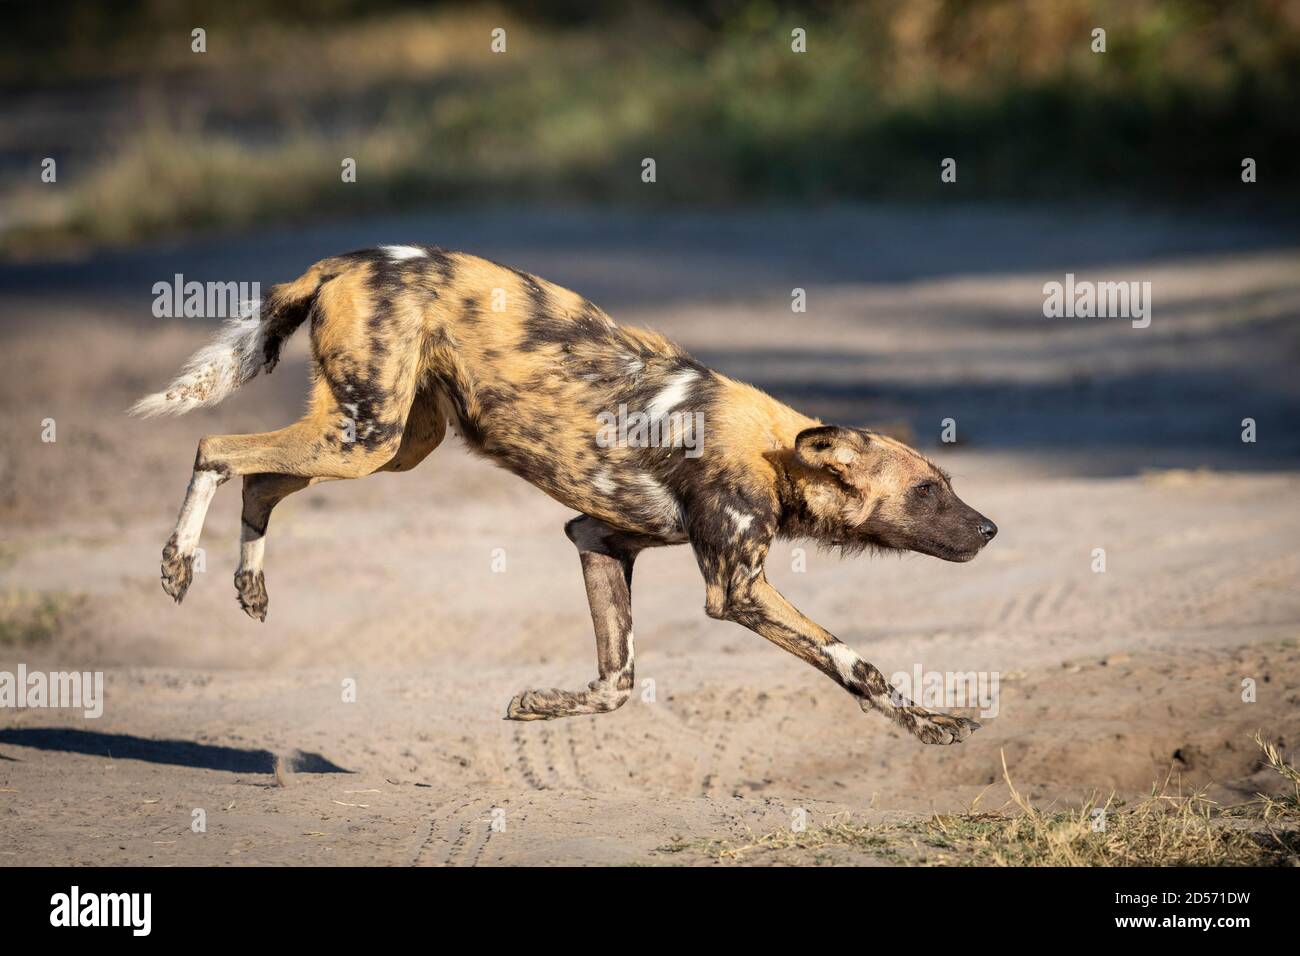 Wilddog jumping on a sandy road in golden morning sunlight in Khwai River in Okavango Delta in Botswana Stock Photo